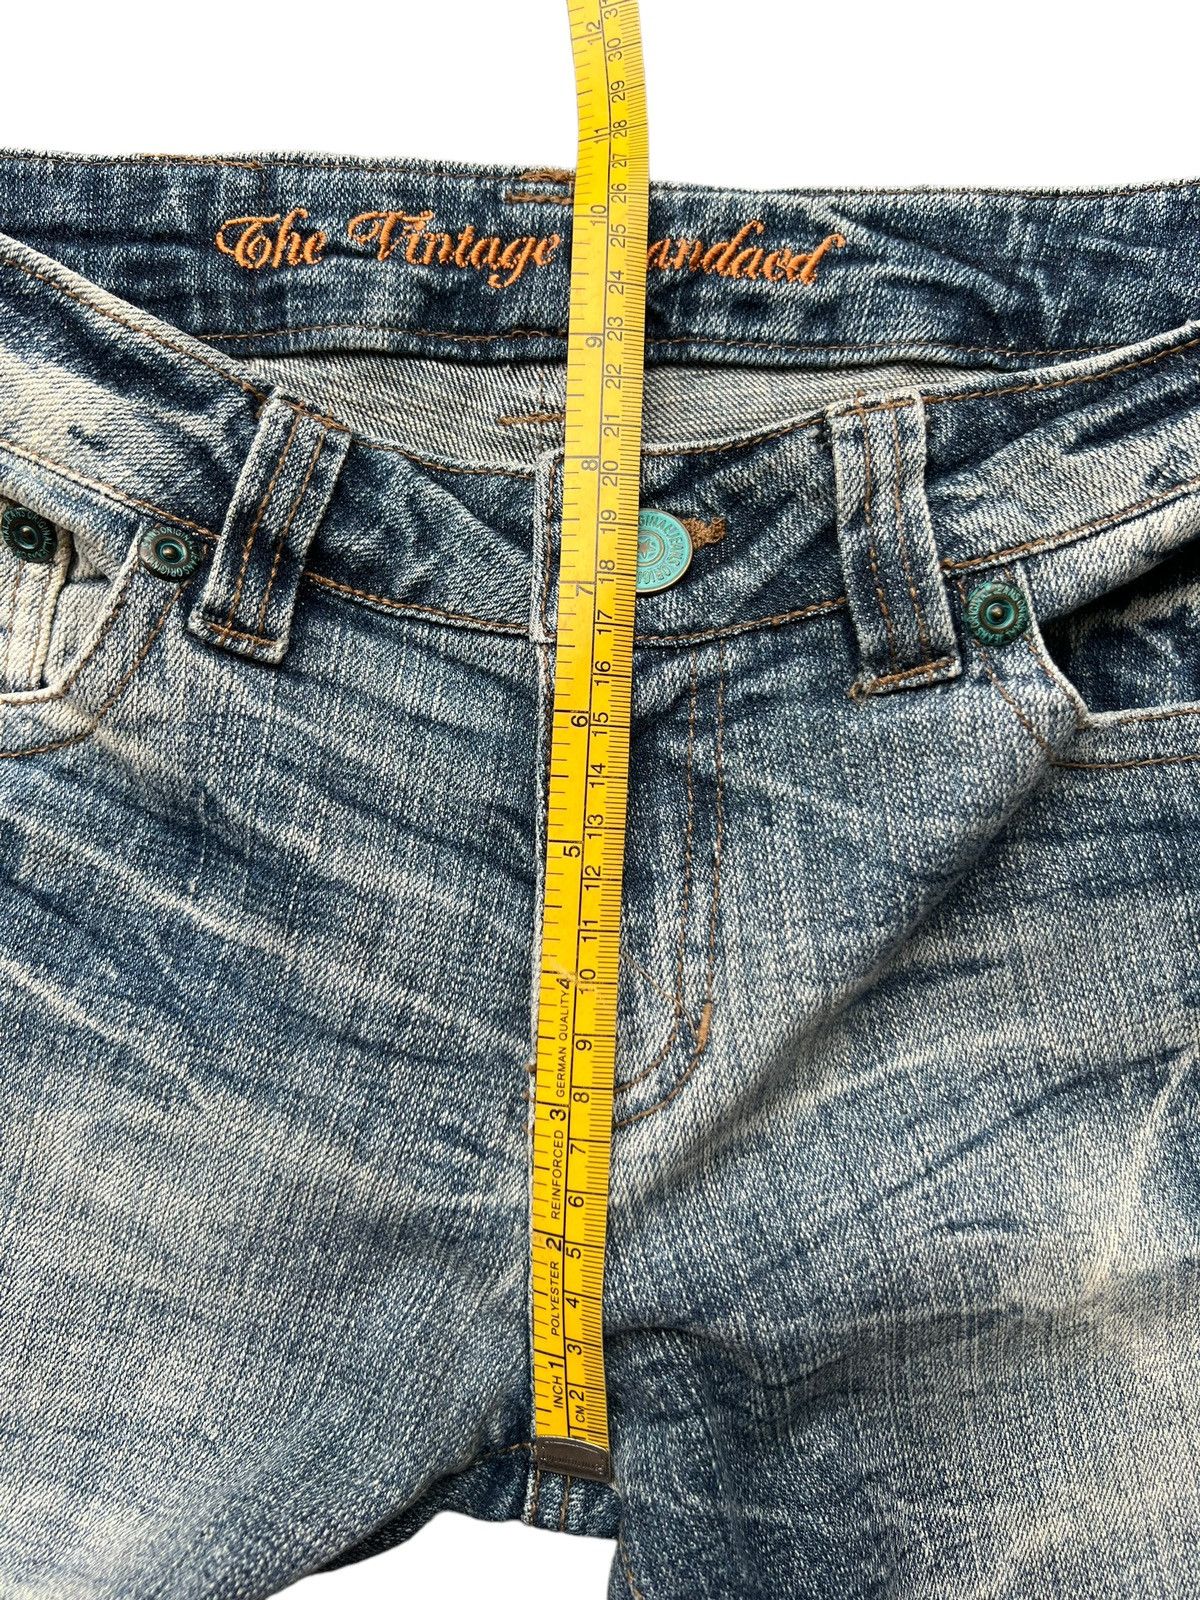 Hype - Vintage Standard Distressed Lowrise Flare Denim Jeans 29x32 - 12